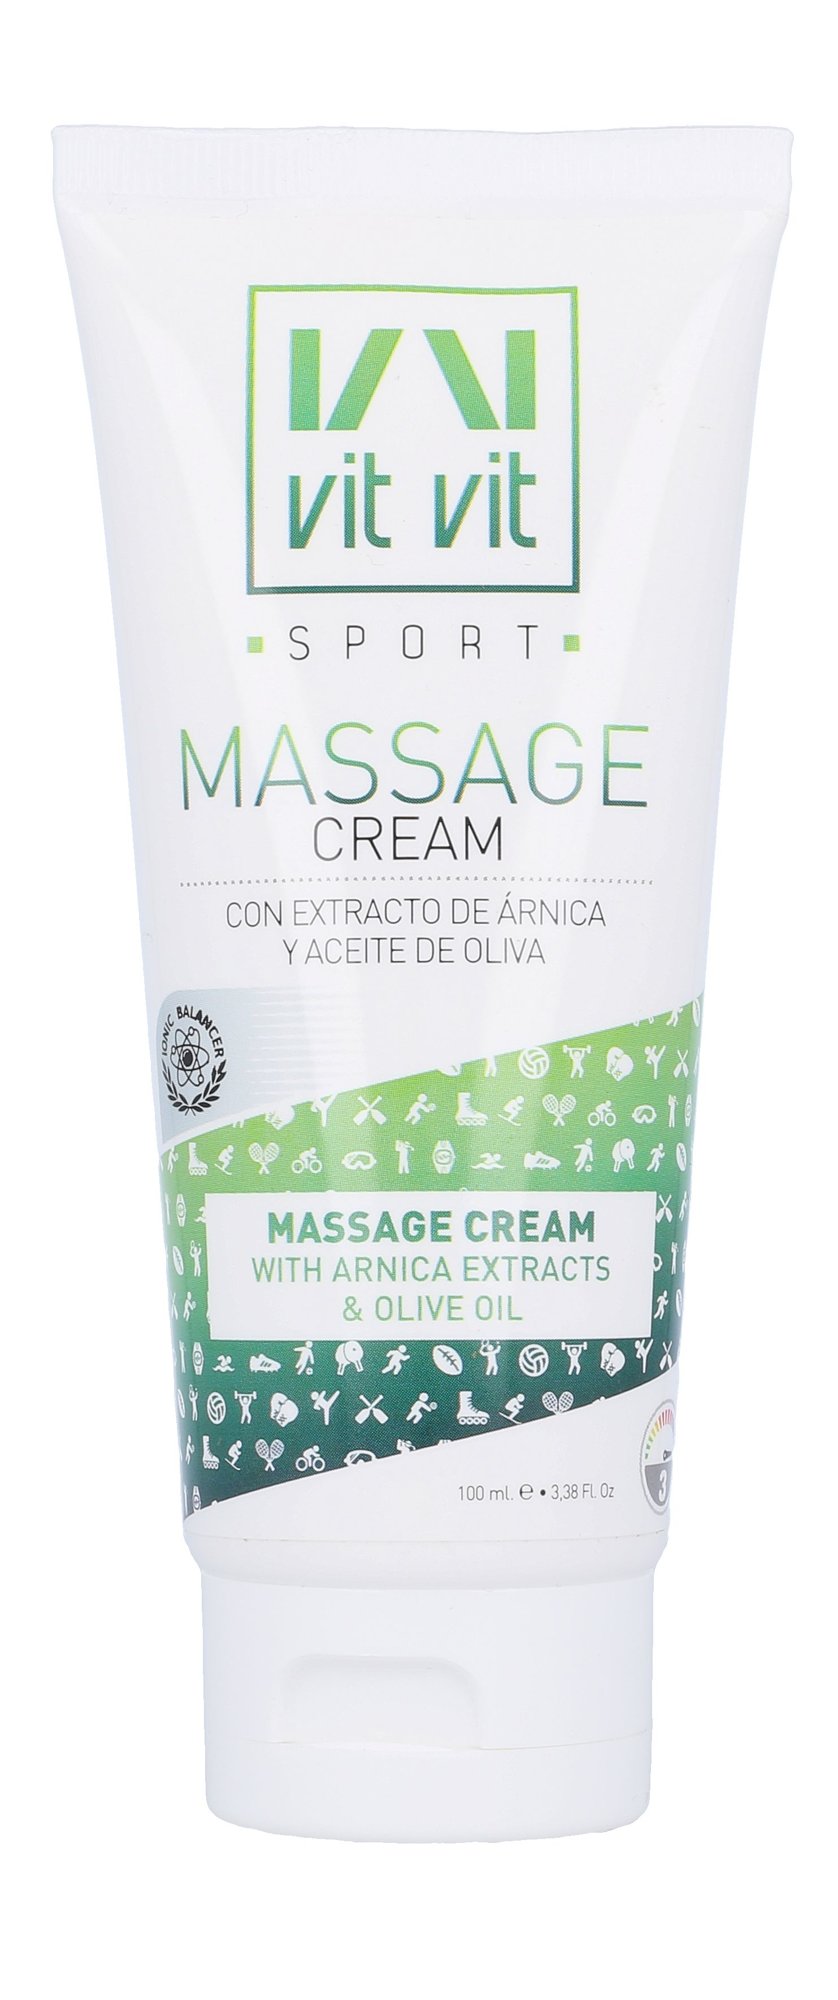 Diet Esthetic Vit Vit Sport Massage Cream